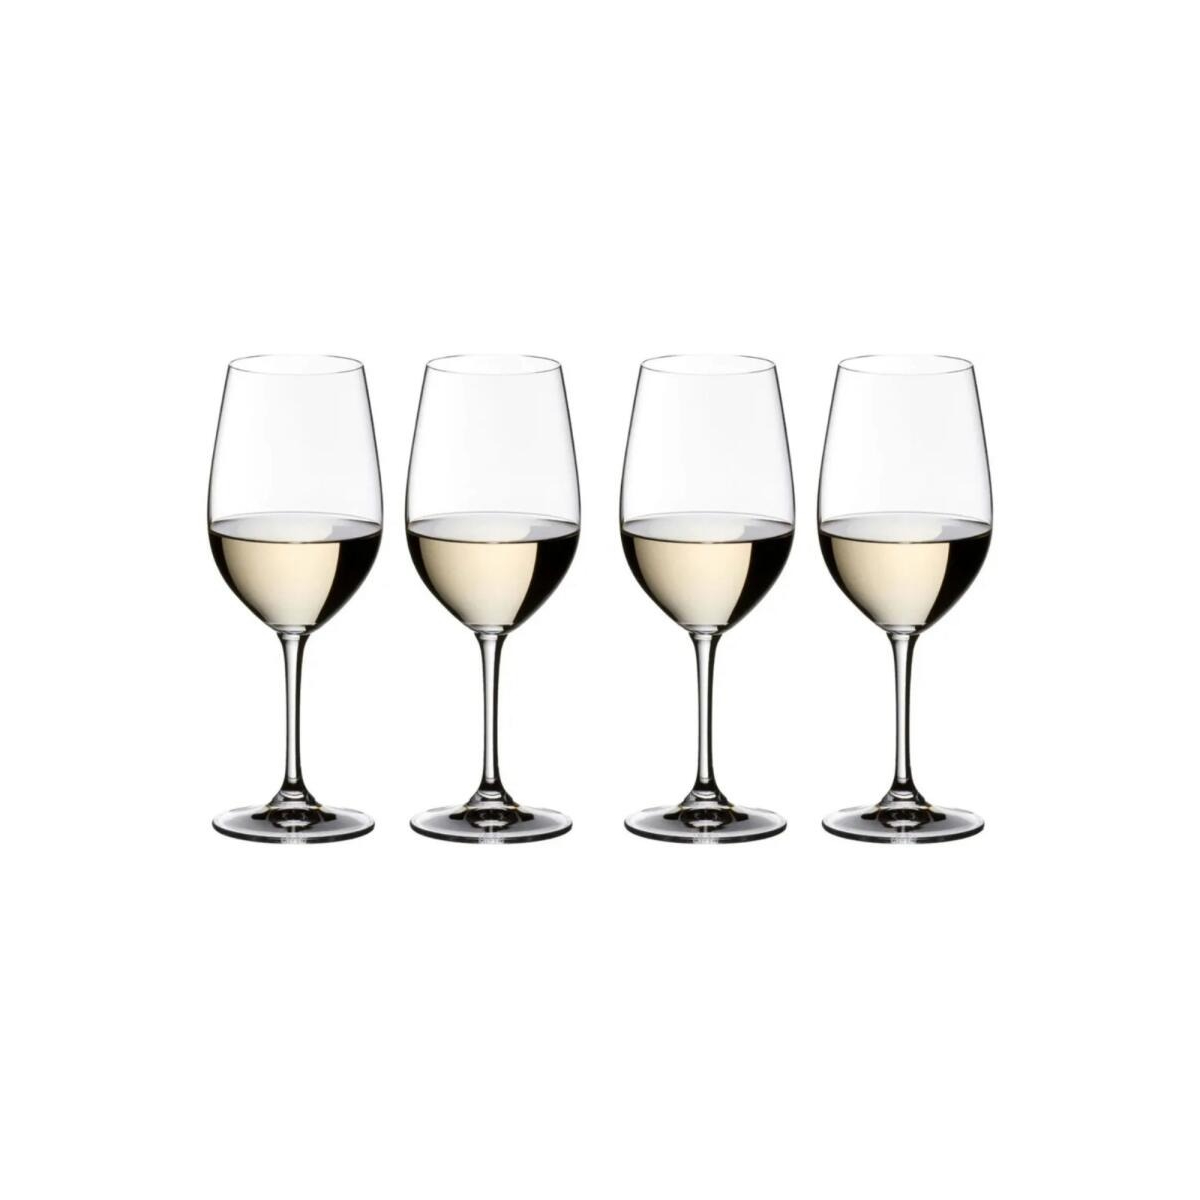 Набор бокалов Riedel Vinum Riesling 400 мл 4 шт набор из 4 х бокалов для вина riedel vinum montrachet chardonnay 600 мл